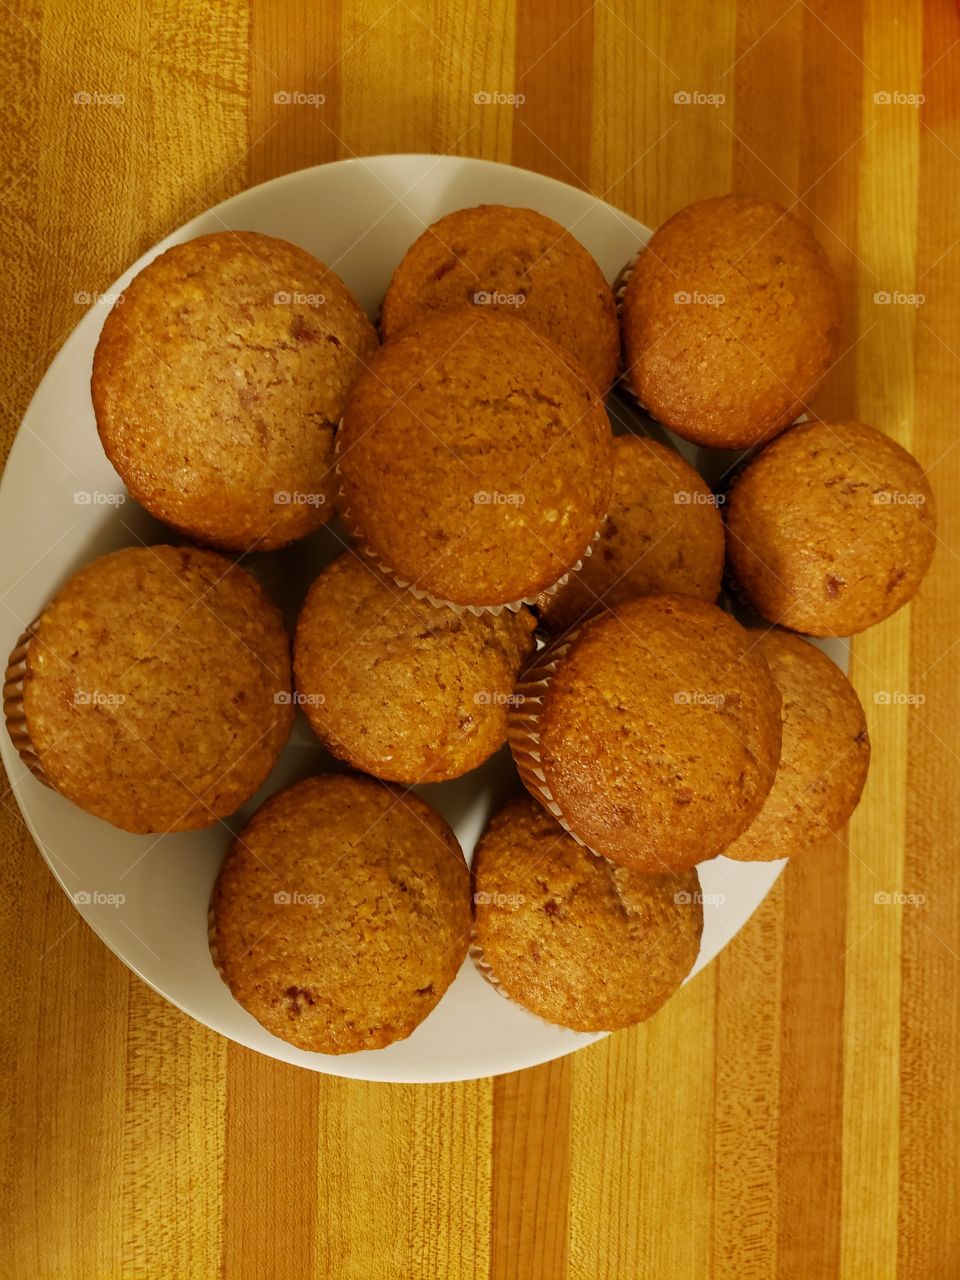 Jam muffins